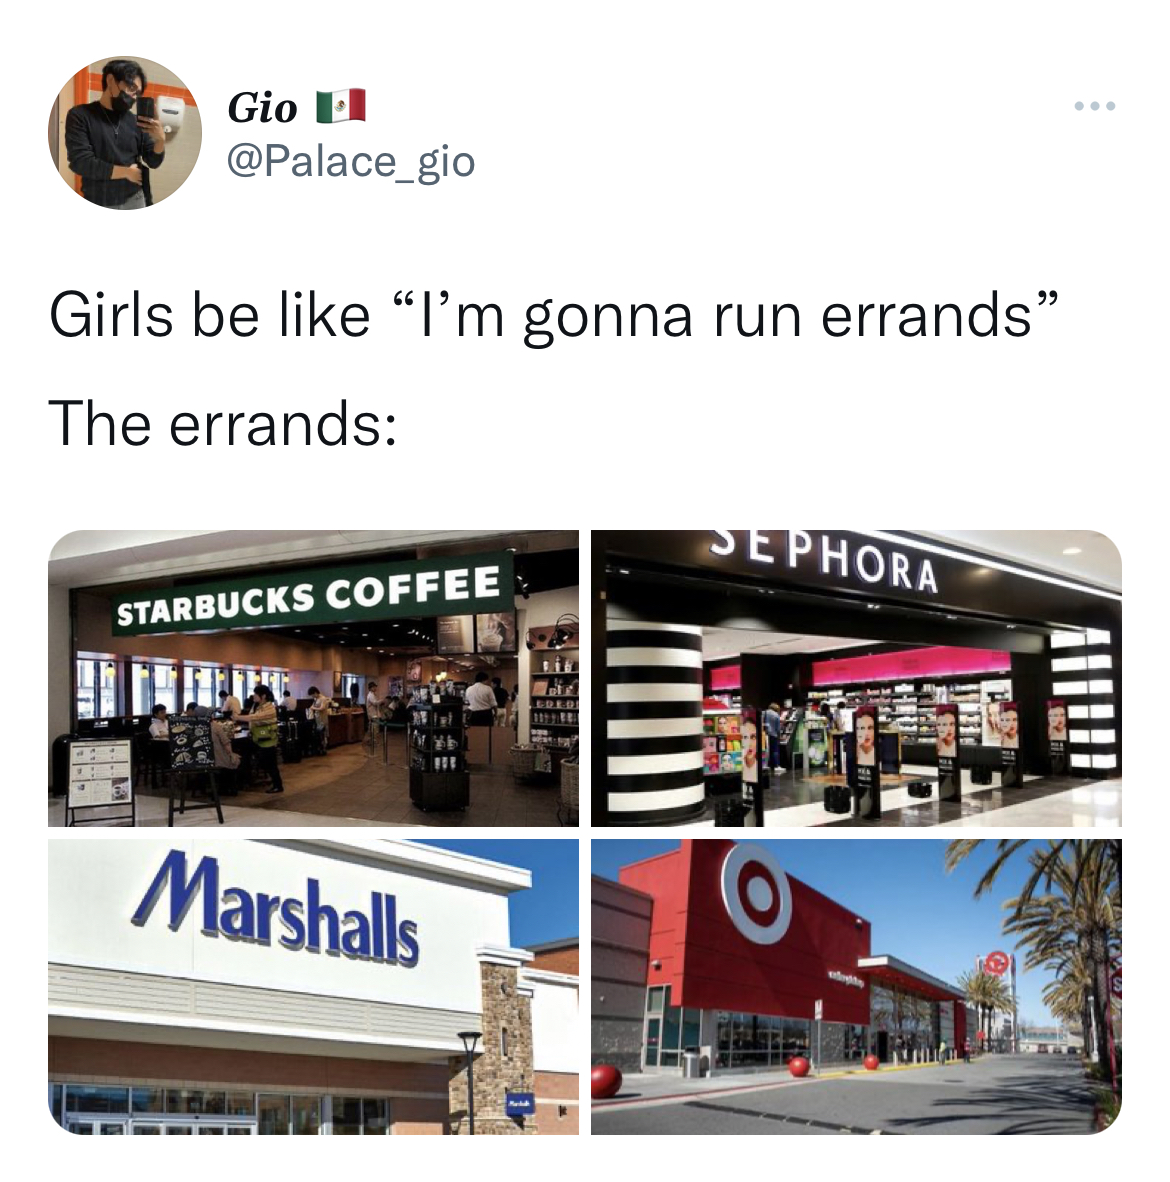 savage tweets to start the week - display advertising - Gio Girls be "I'm gonna run errands" The errands Starbucks Coffee Marshalls Befunz Sephora Whe